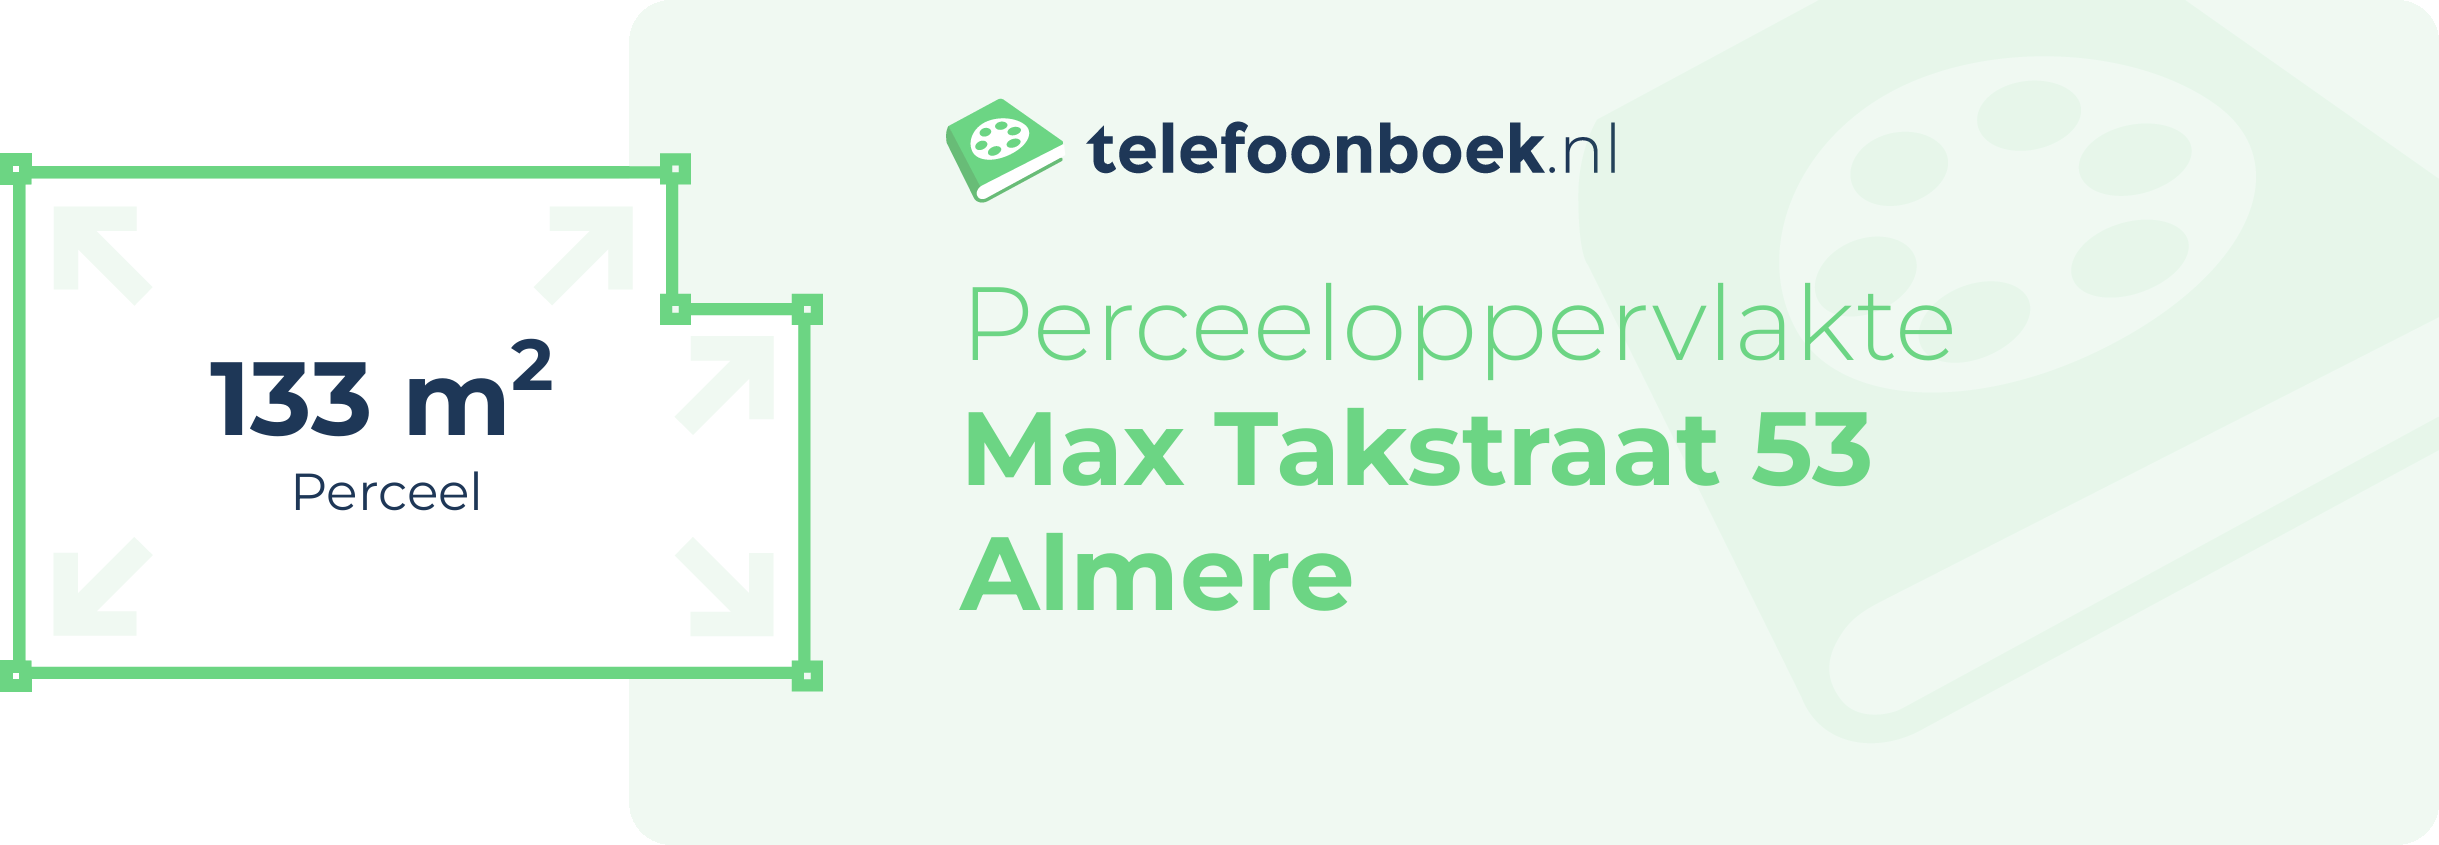 Perceeloppervlakte Max Takstraat 53 Almere